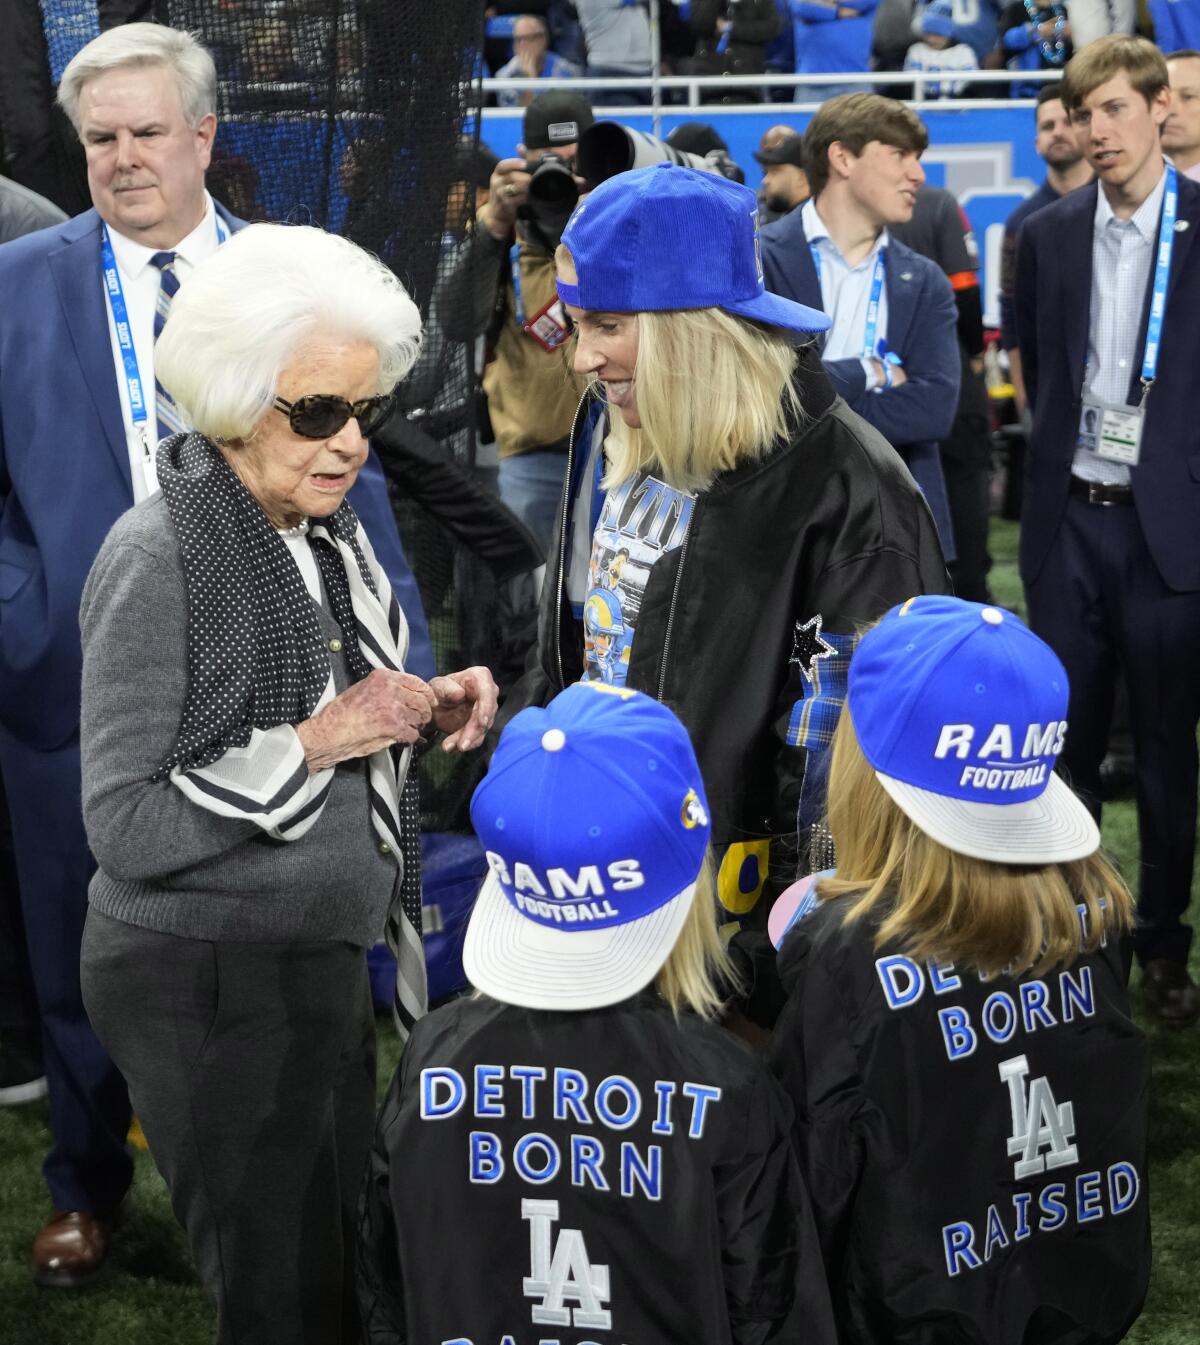 Kelly Stafford and two kids, wearing "Detroit Born, LA Raised" shirts, talk to Martha Firestone Ford